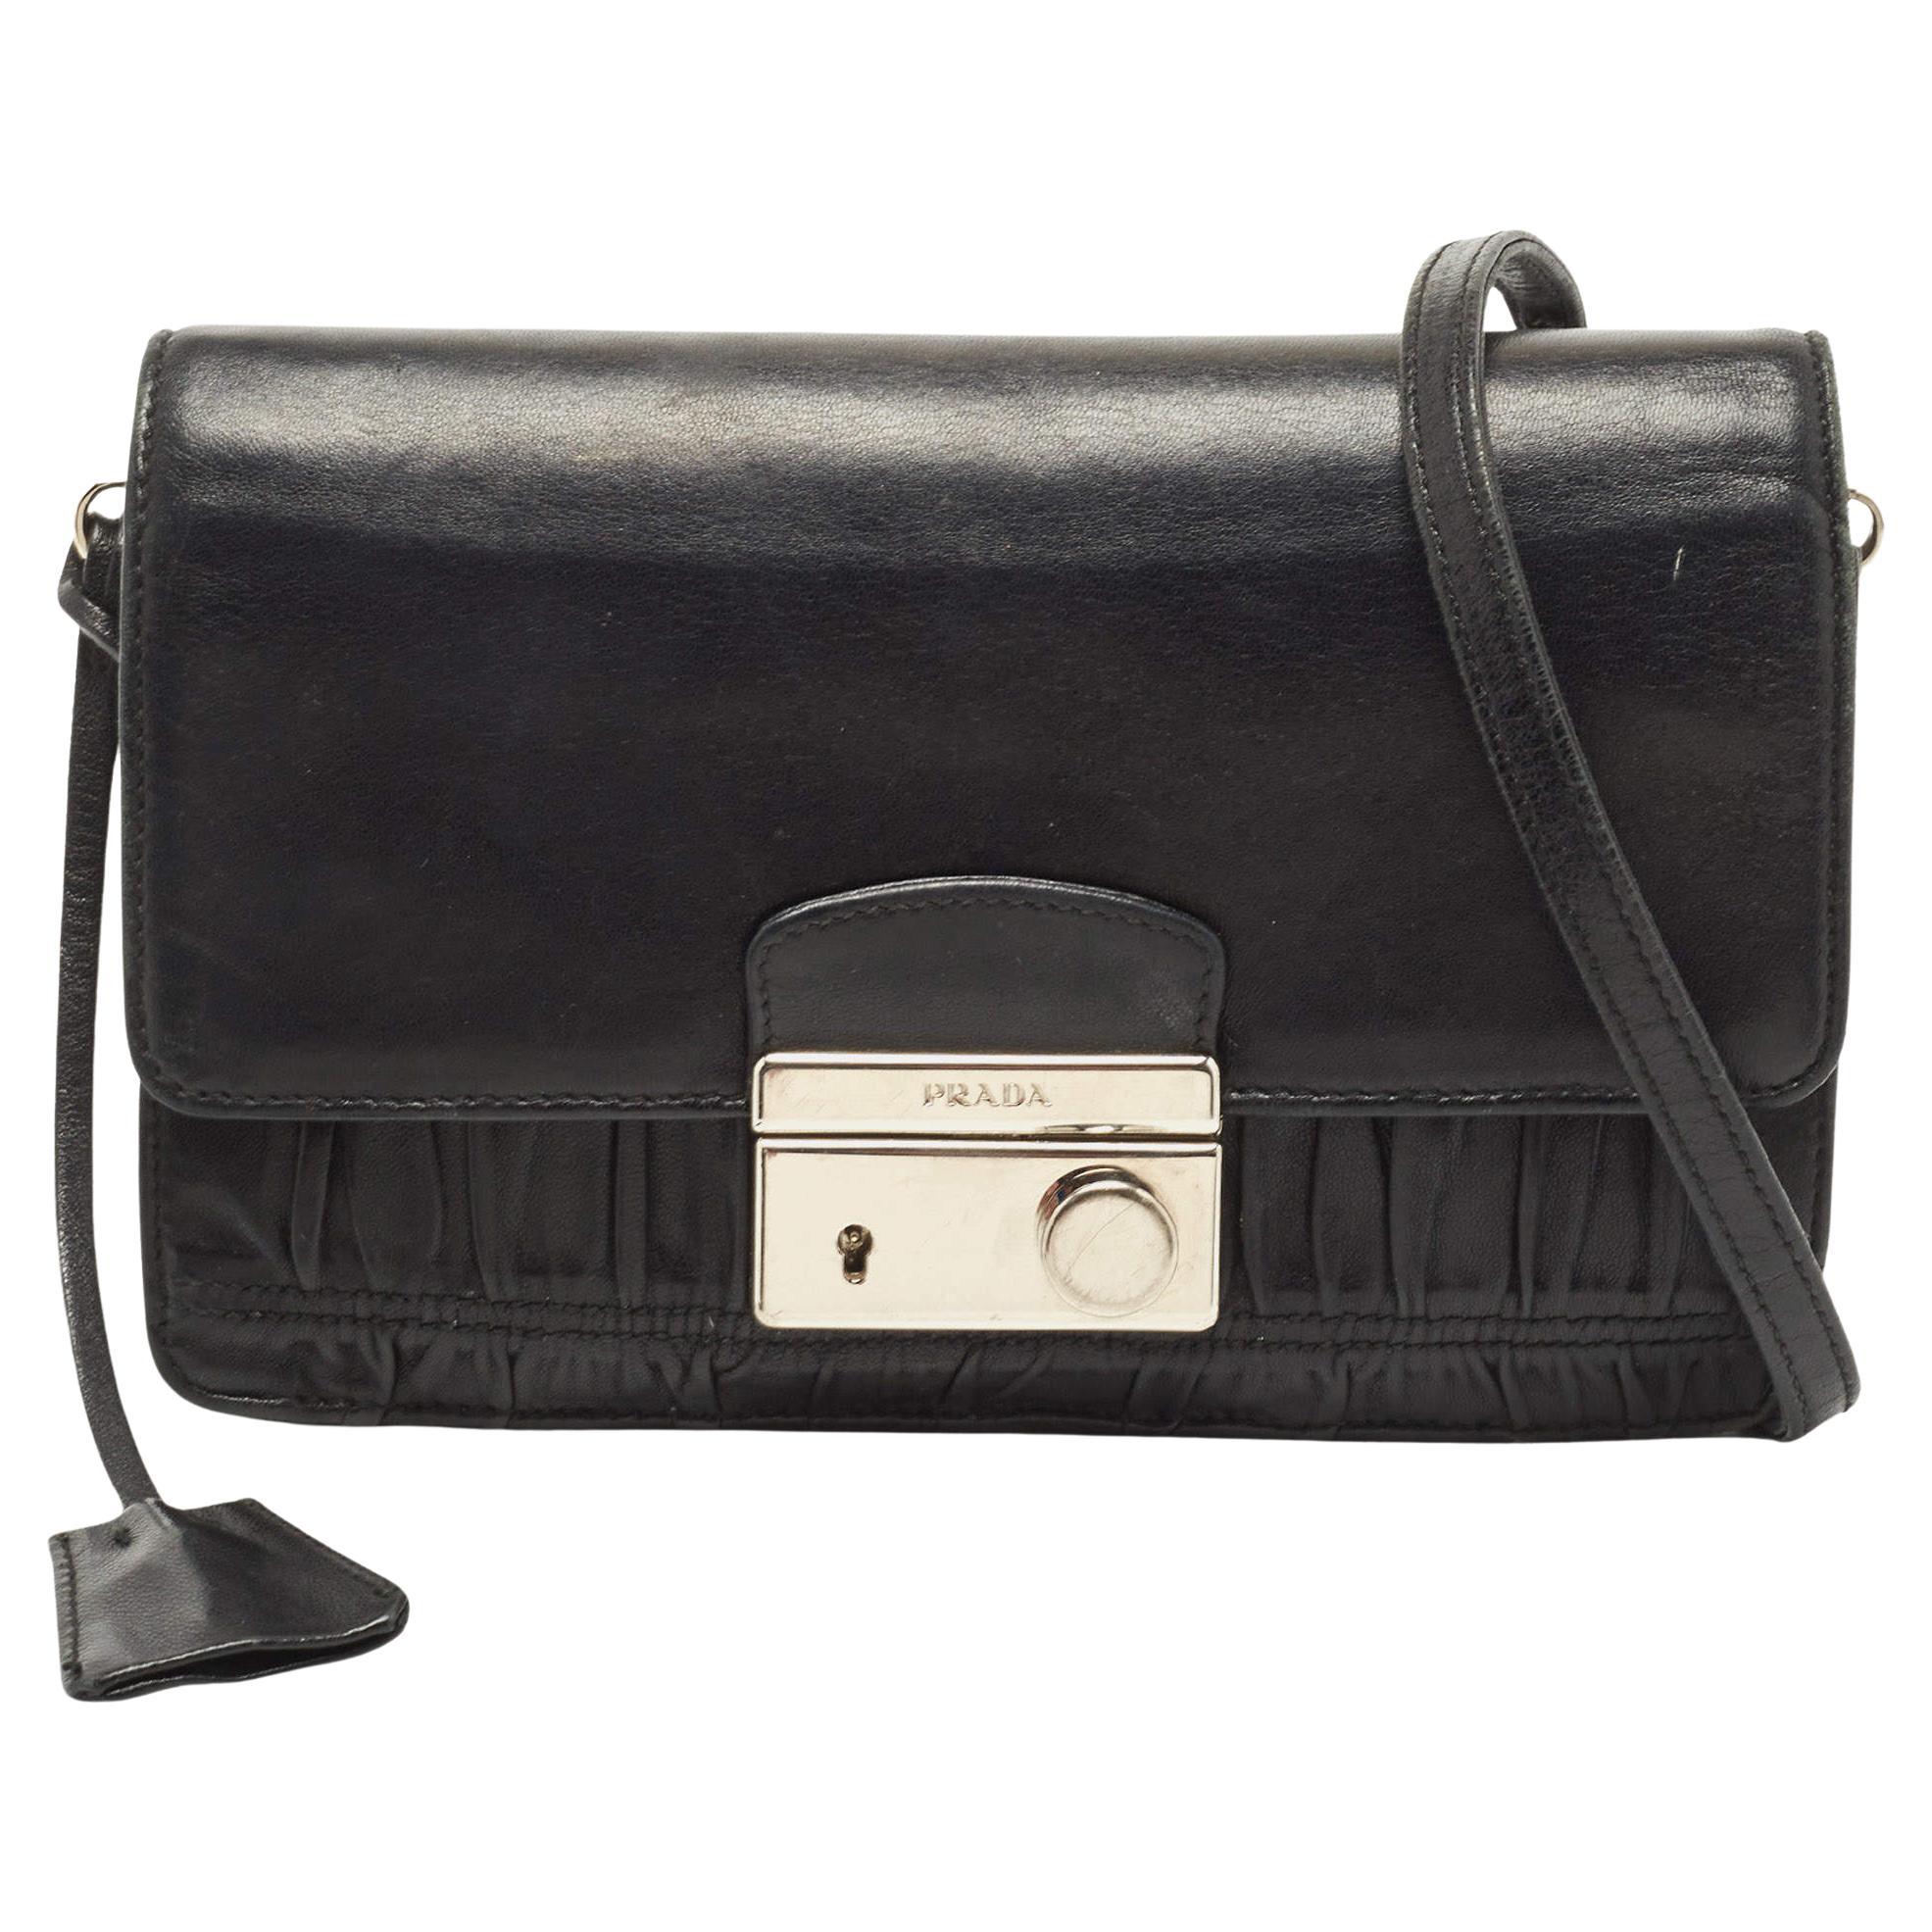 Saffiano Leather Crossbody Bag in Black - Prada